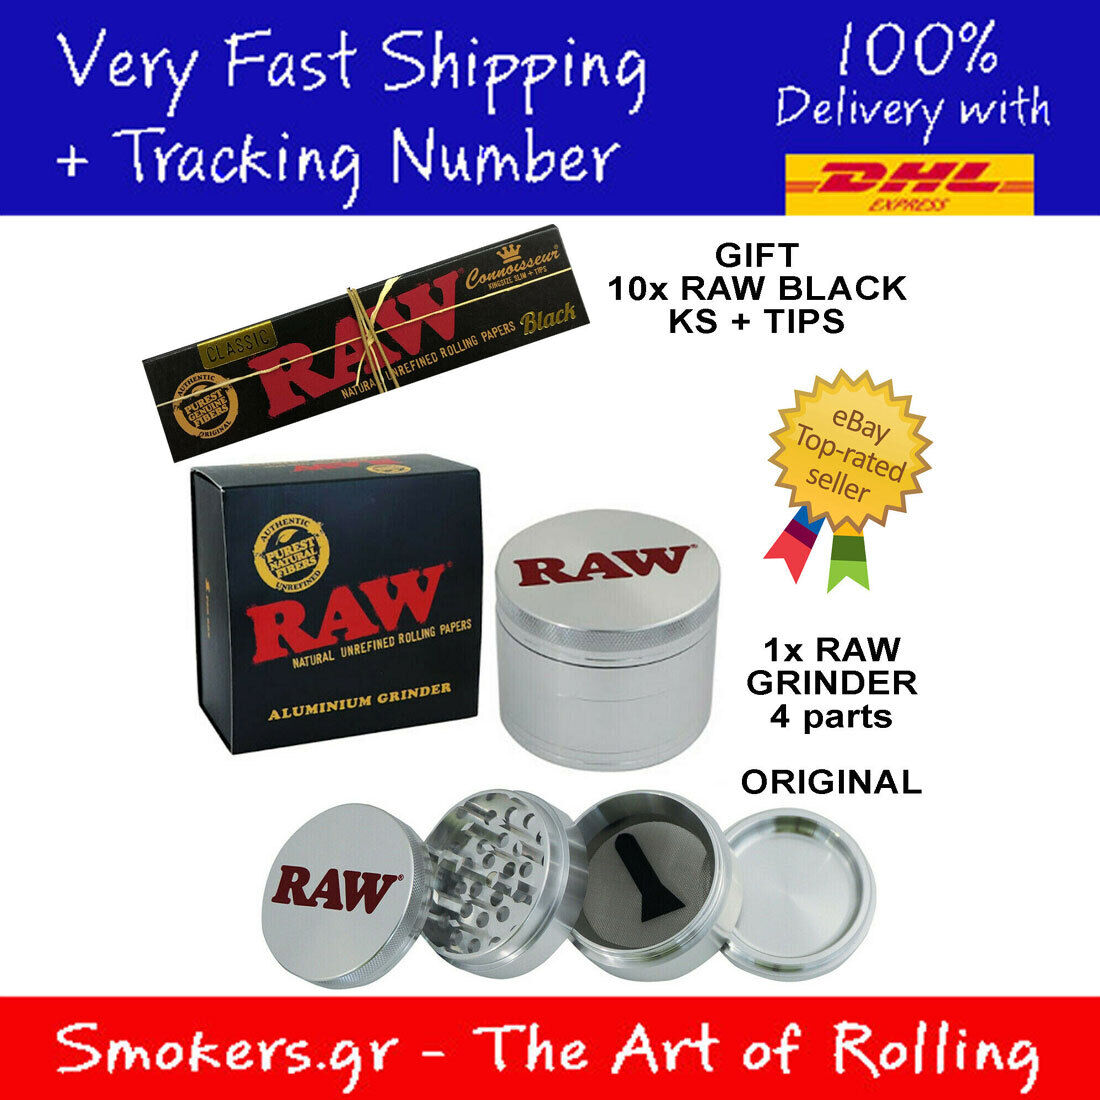 1x Original RAW Grinder  Aluminium 4 parts + Giftbox + 10x RAW BLACK KS + TIPS